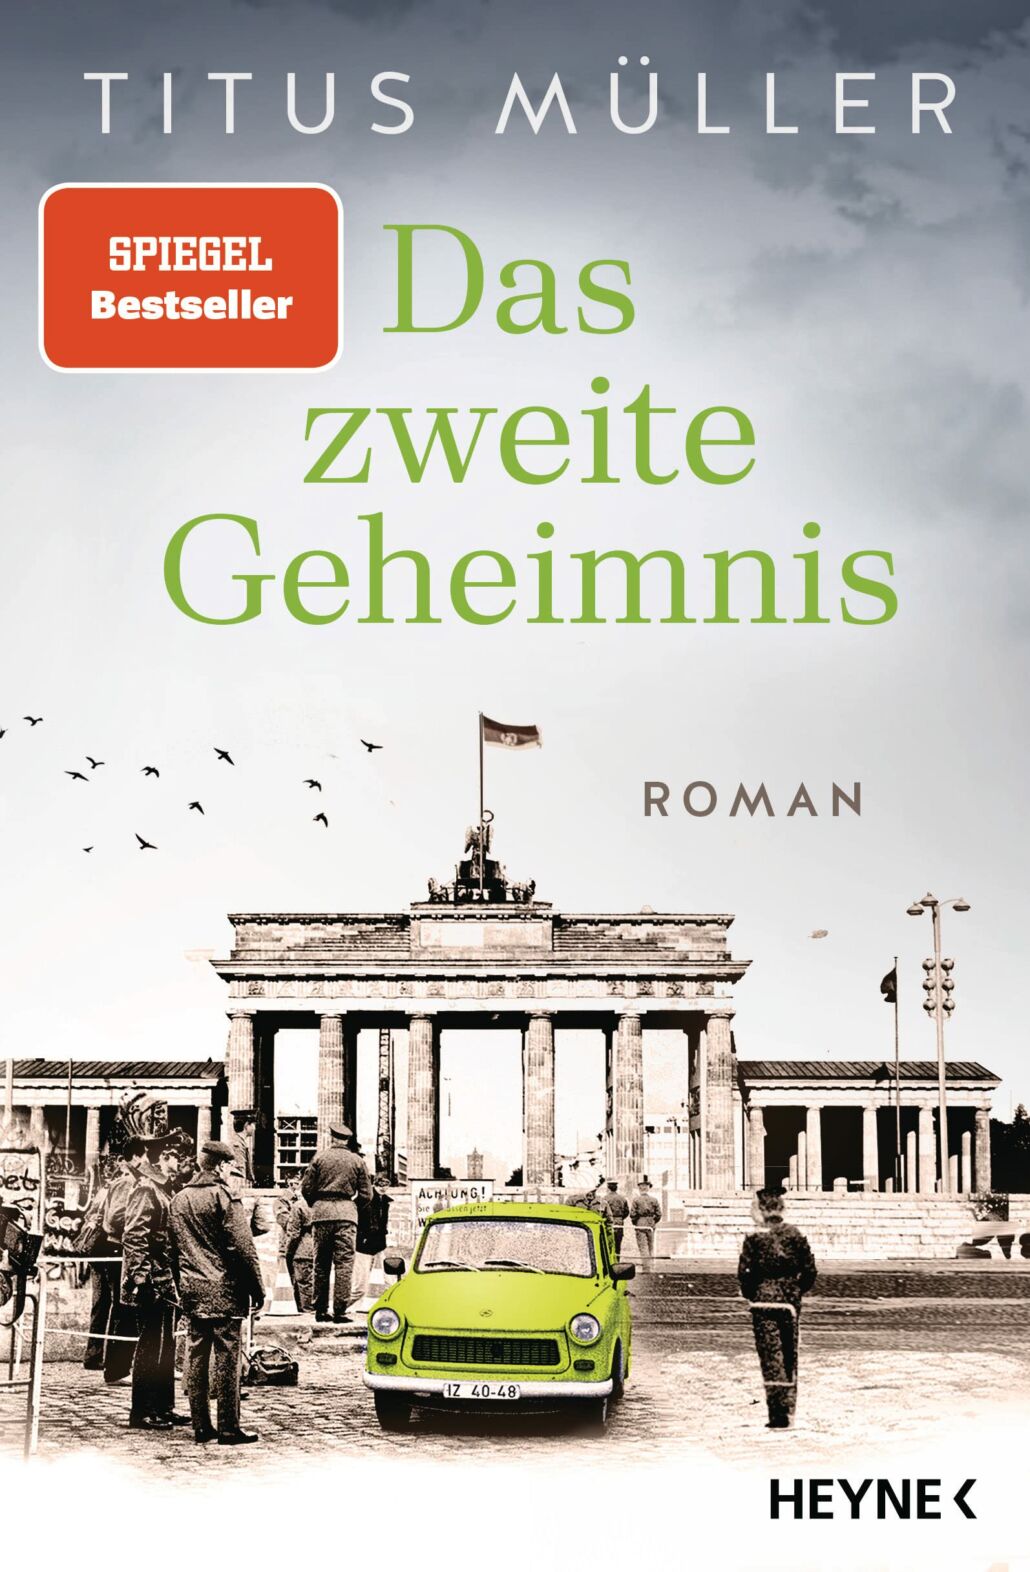 Deutsch-deutsche Geschichte passiert in Berlin